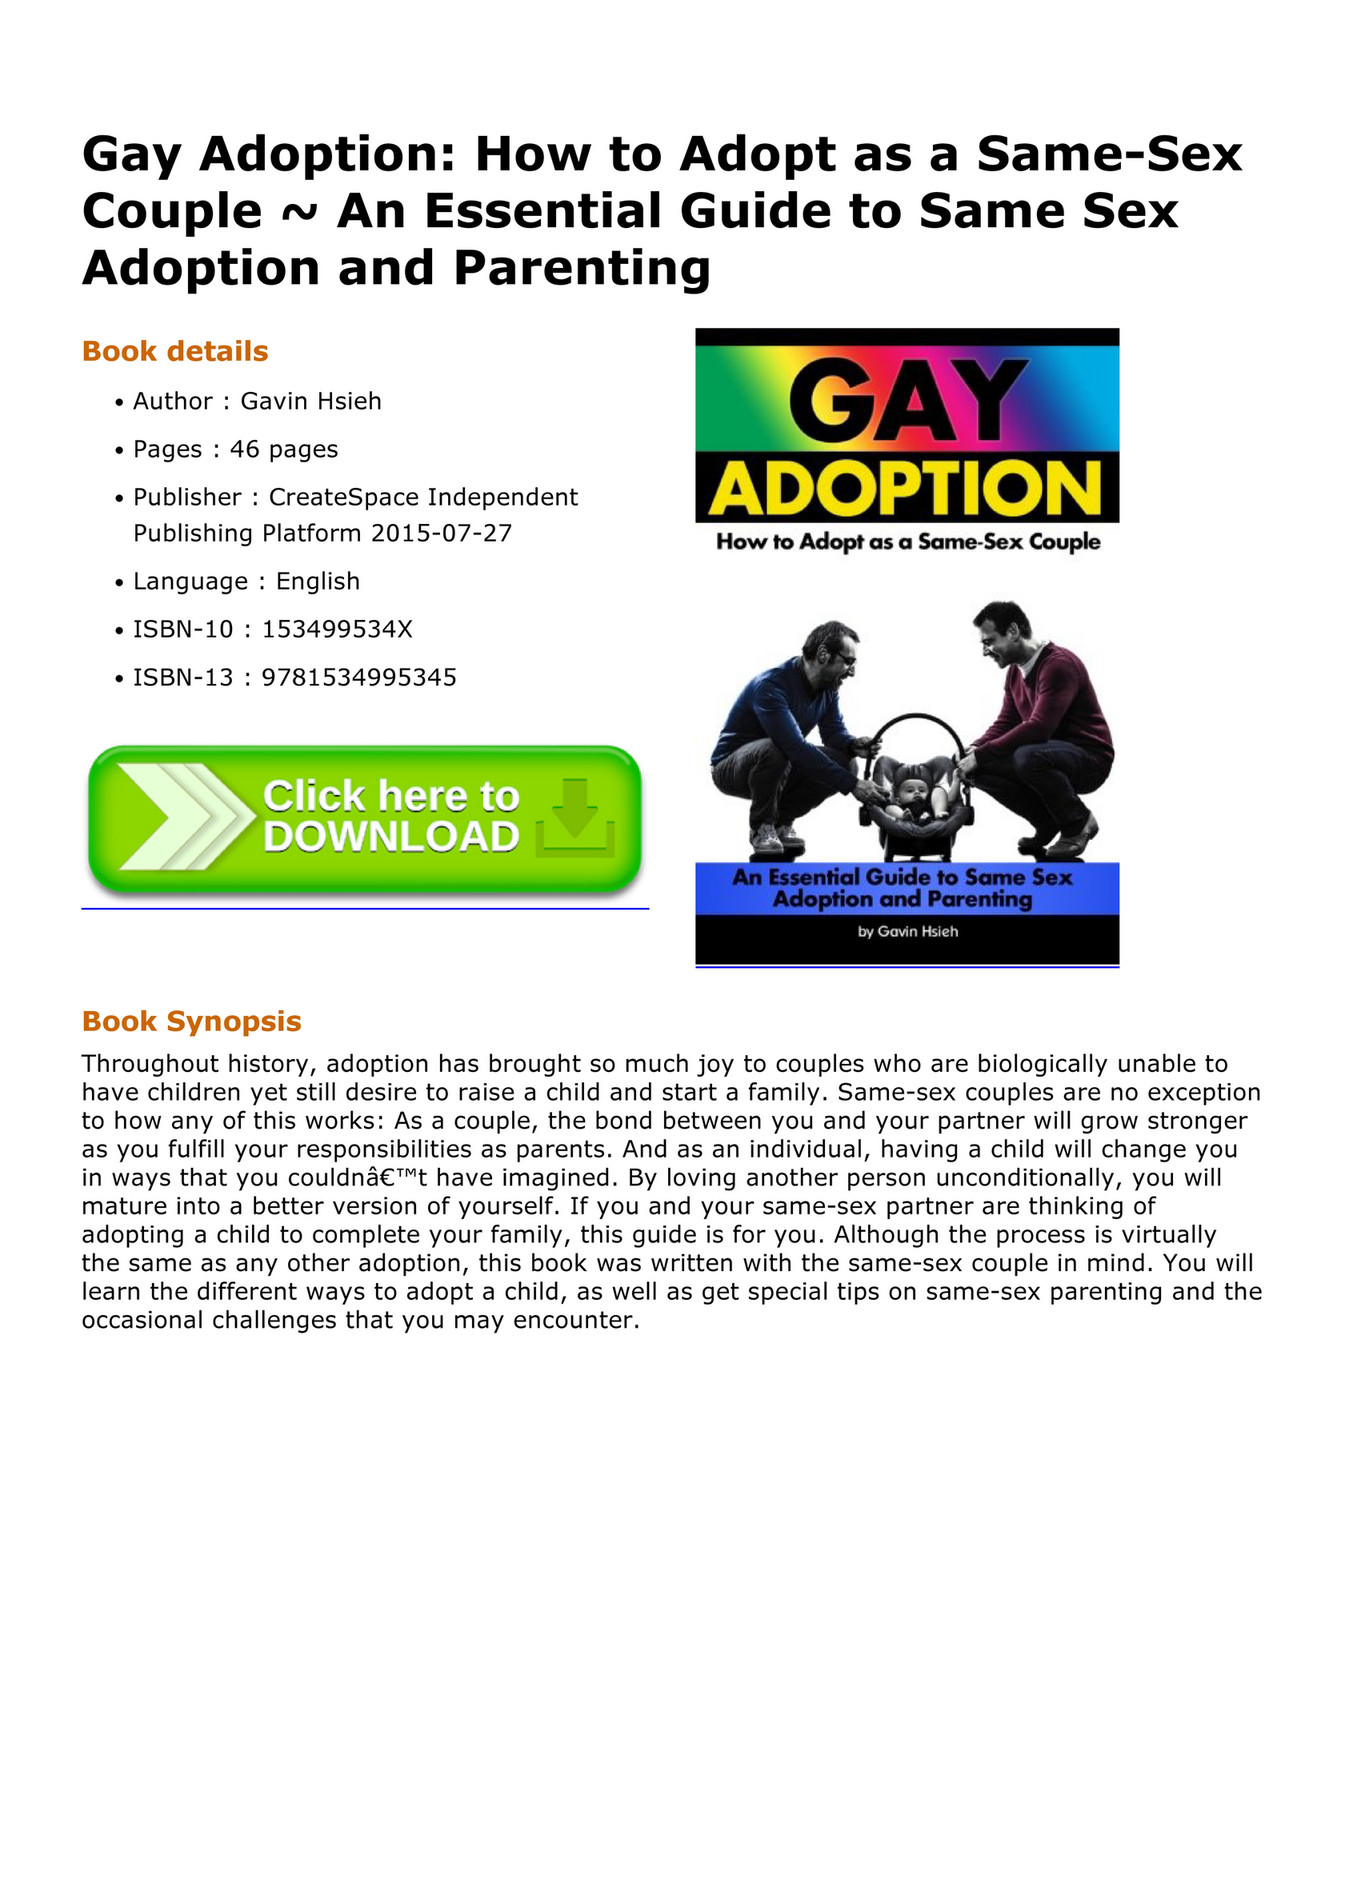 Sex Education Gay Adoption How To Adopt As A Same Sex Couple An Essential Guide To Same Sex